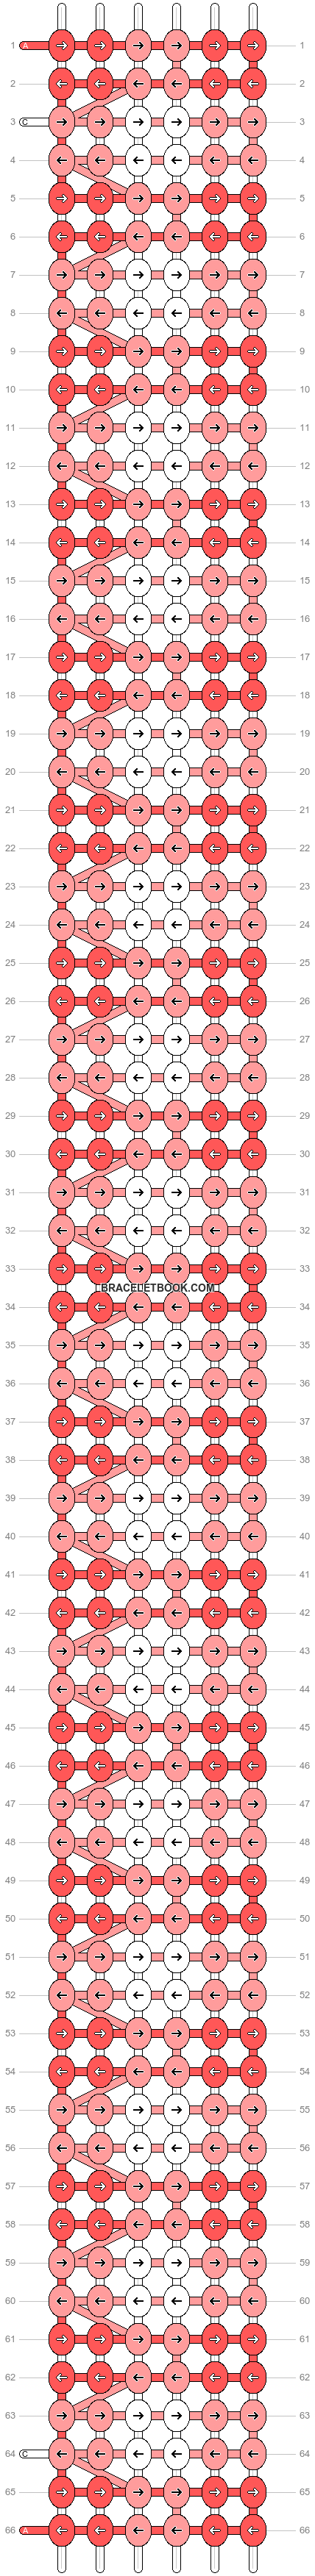 Alpha pattern #80755 variation #156538 pattern